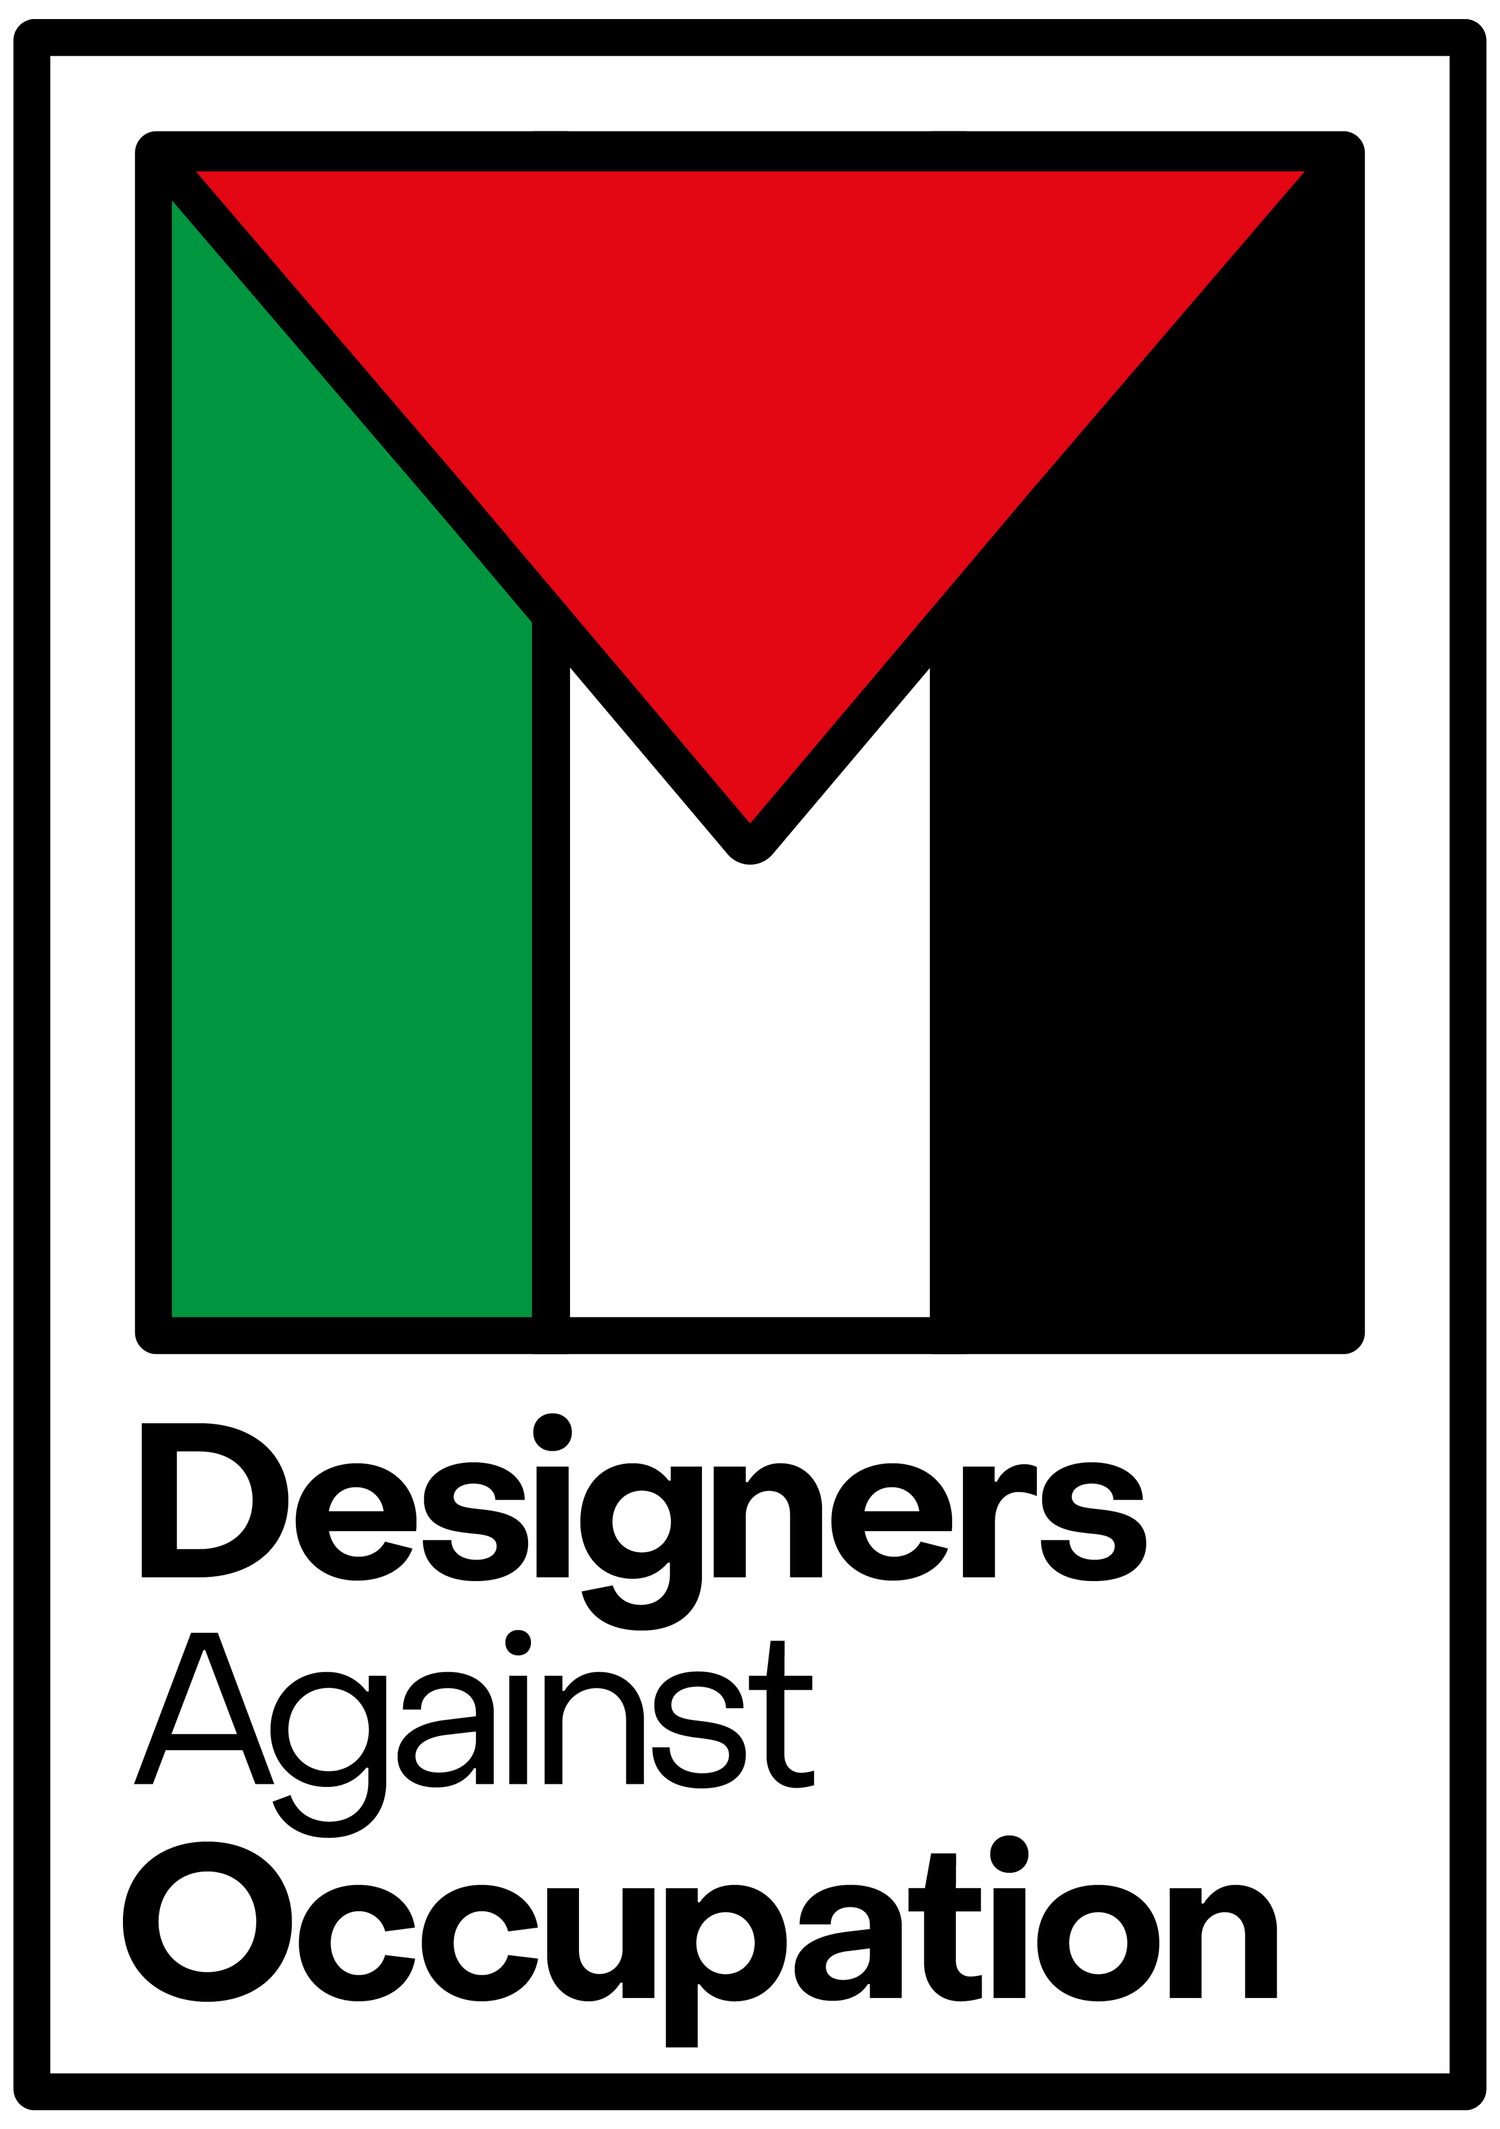 Designers Against Occupation